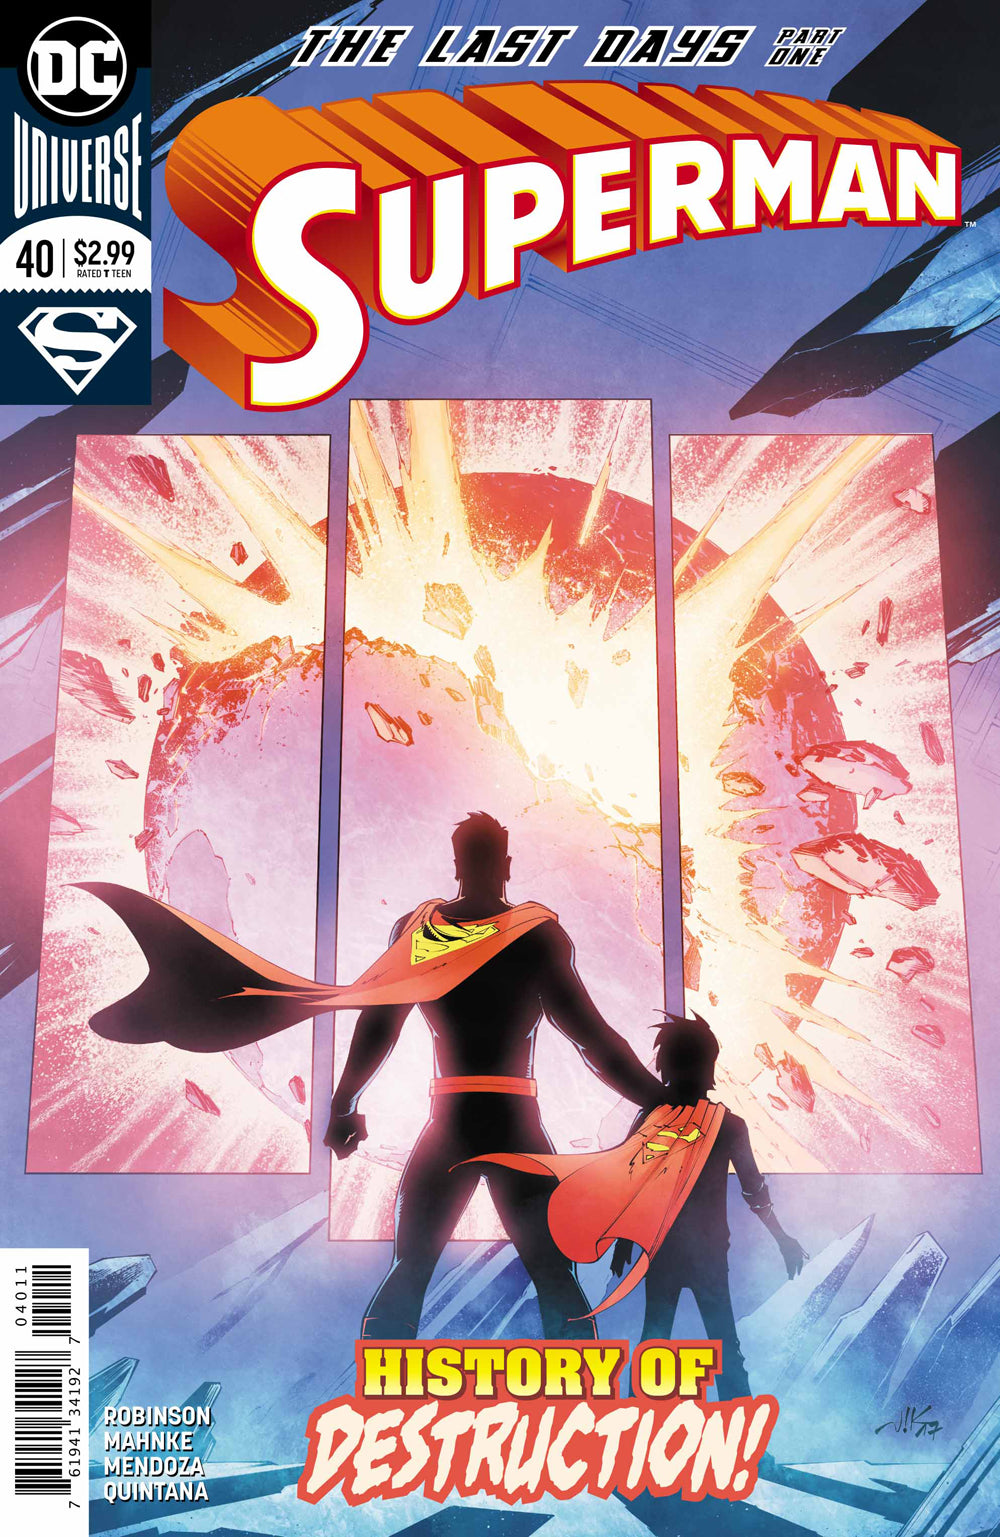 SUPERMAN Vol 4 #40 | Game Master's Emporium (The New GME)